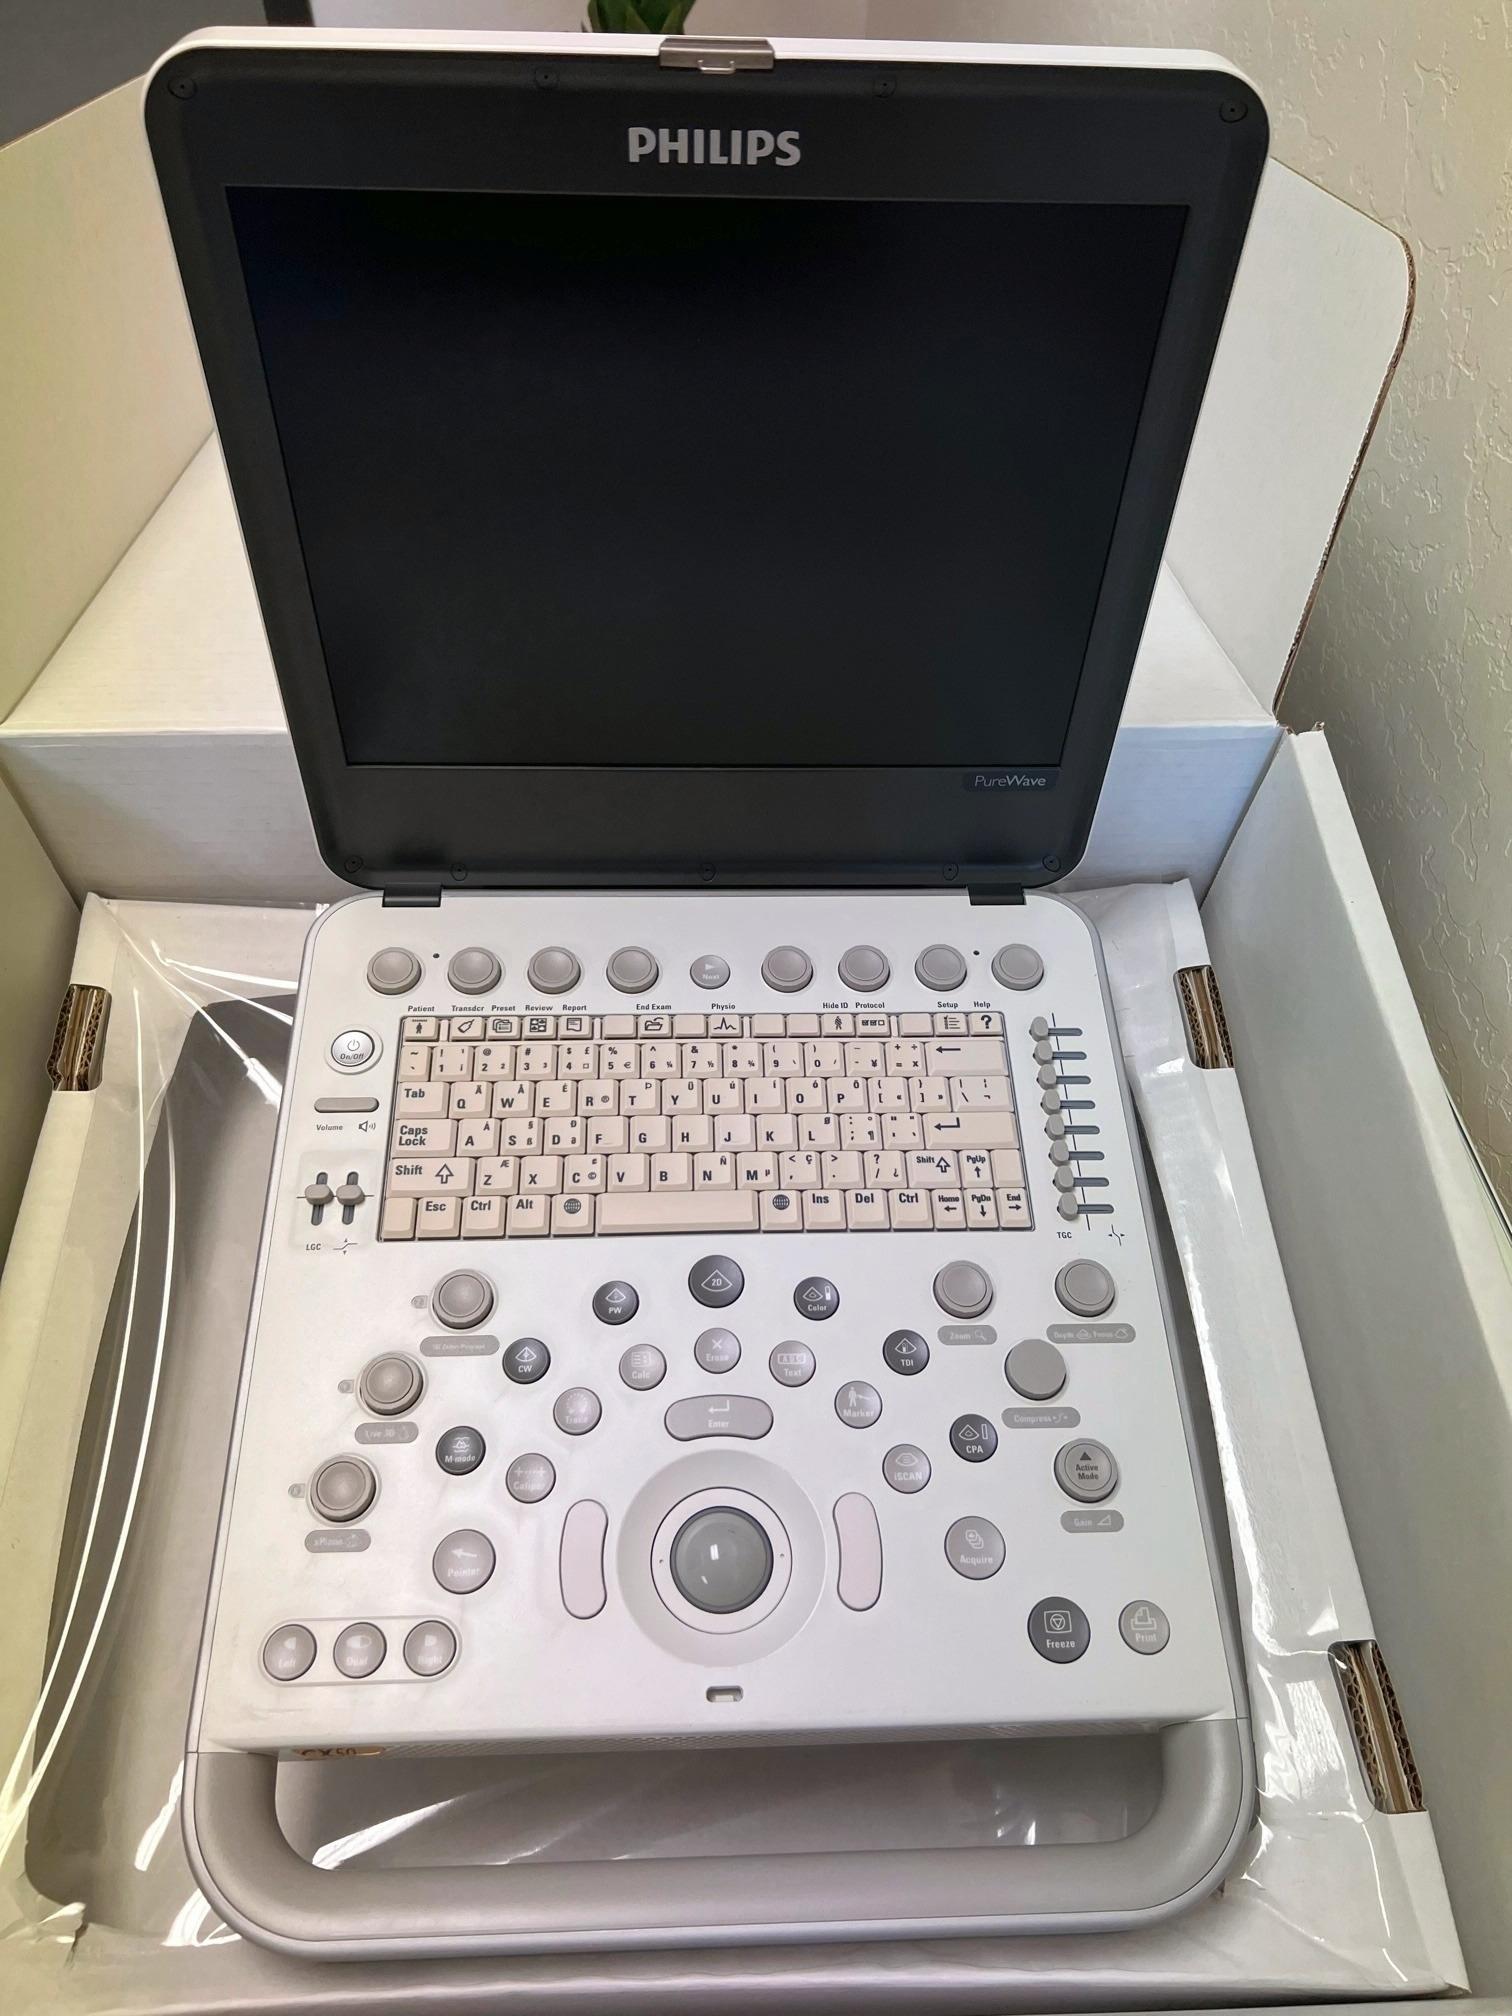 Philips CX50 Ultrasound